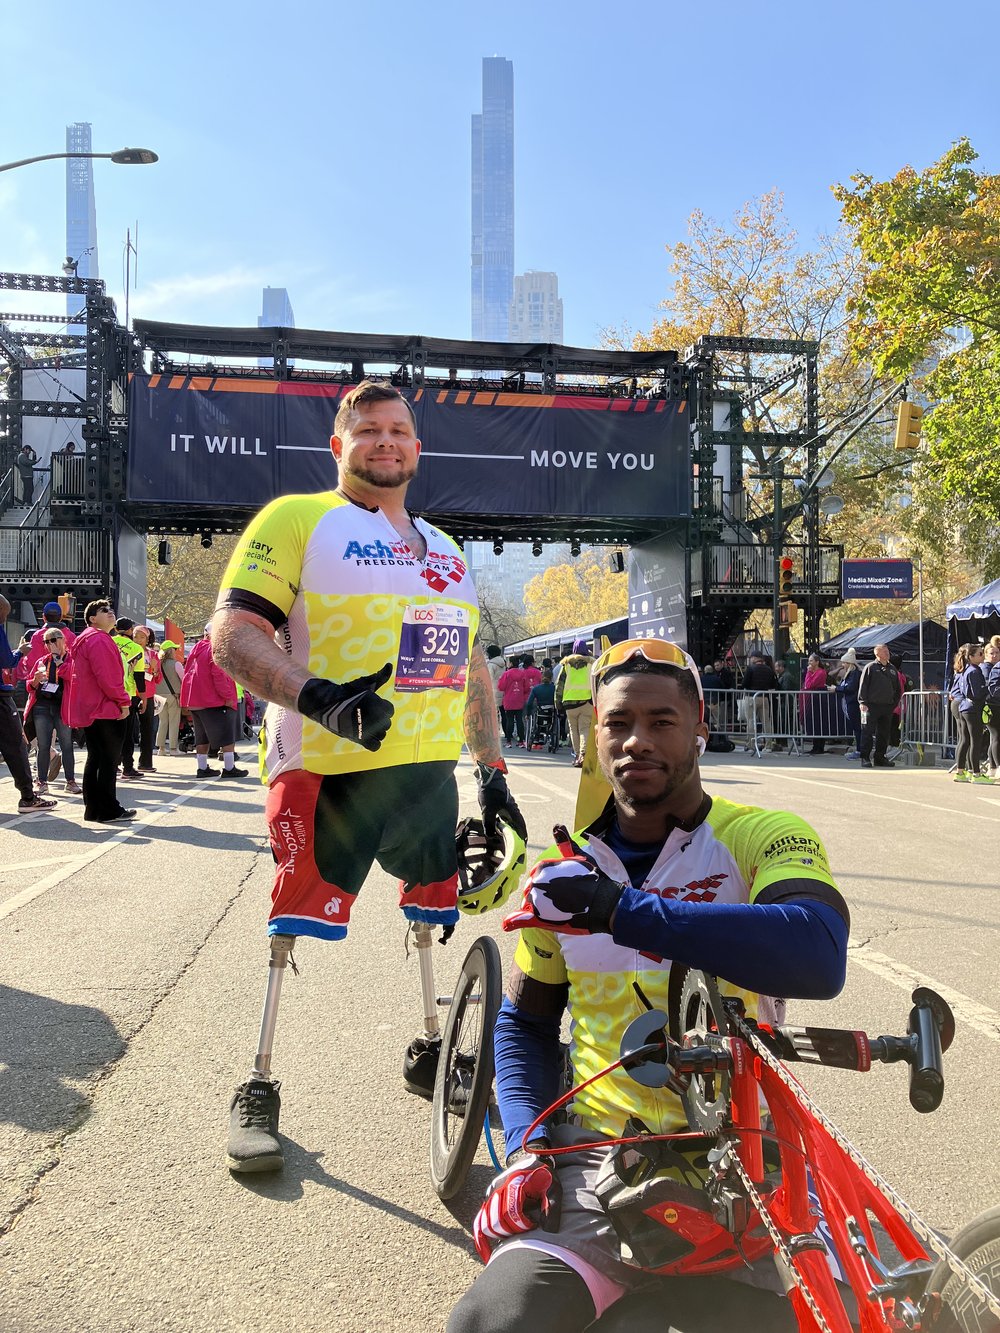  Achilles Freedom Team athletes posing together at the NYC Marathon finish line  